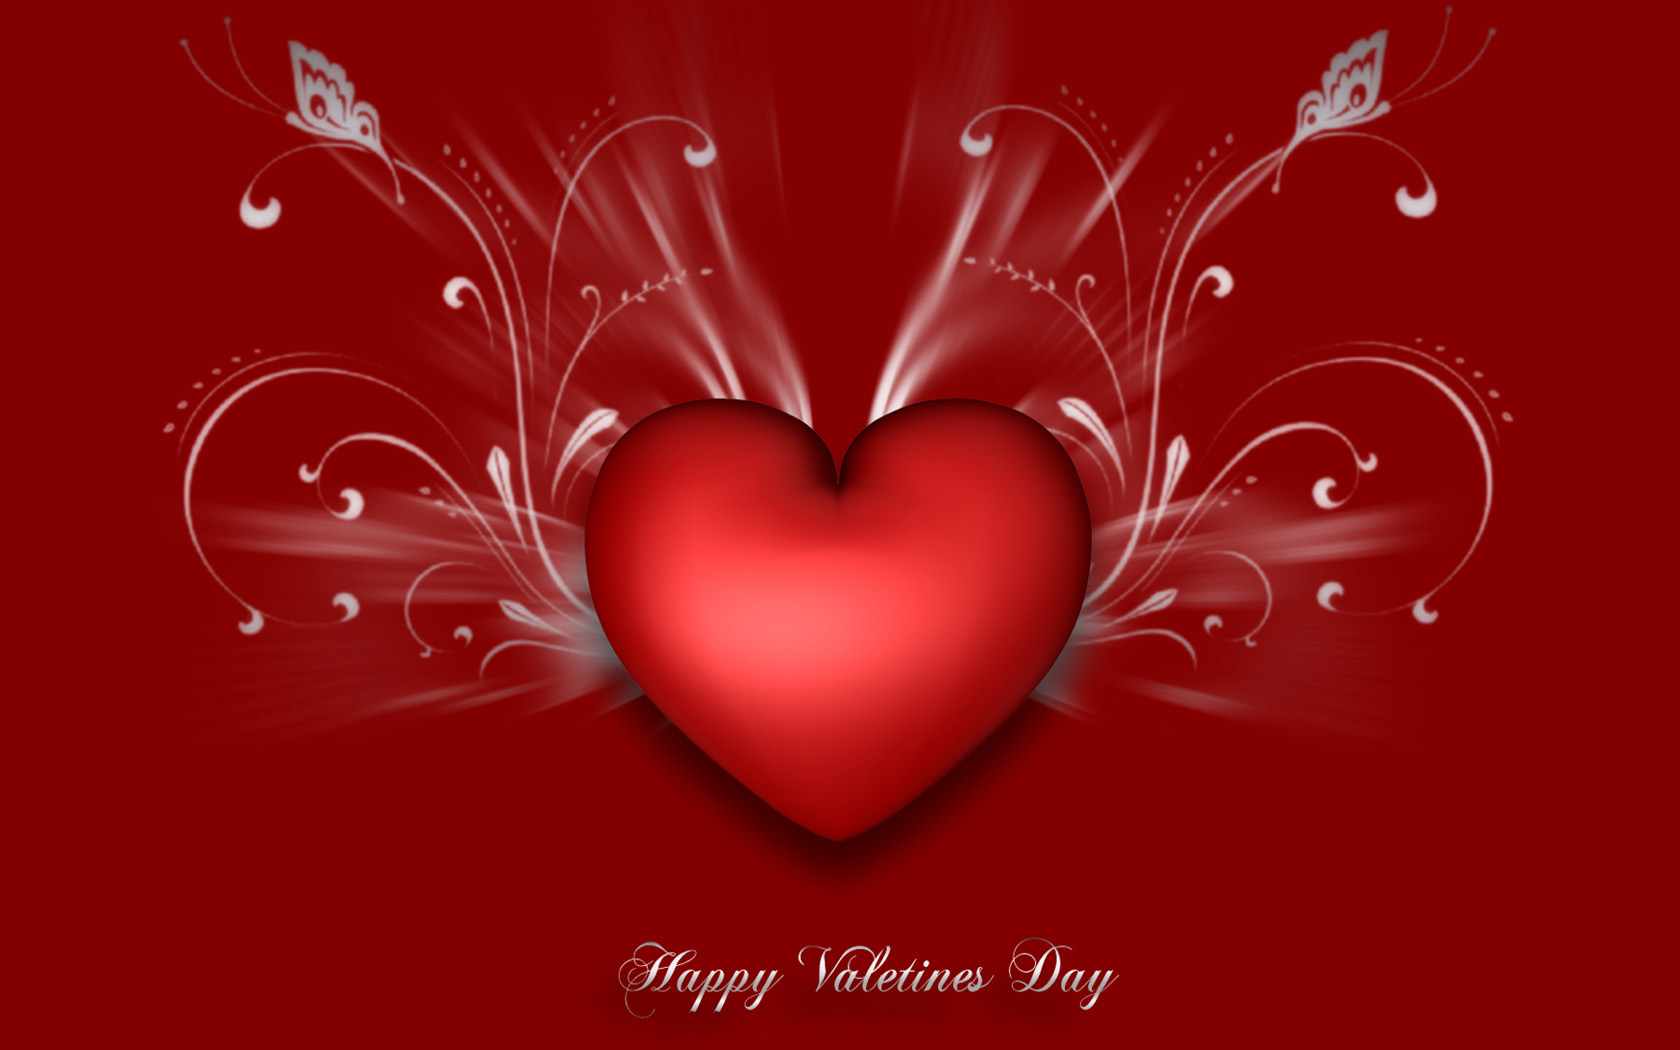 valentine's day - Valentine's Day Photo (36536053) - Fanpop